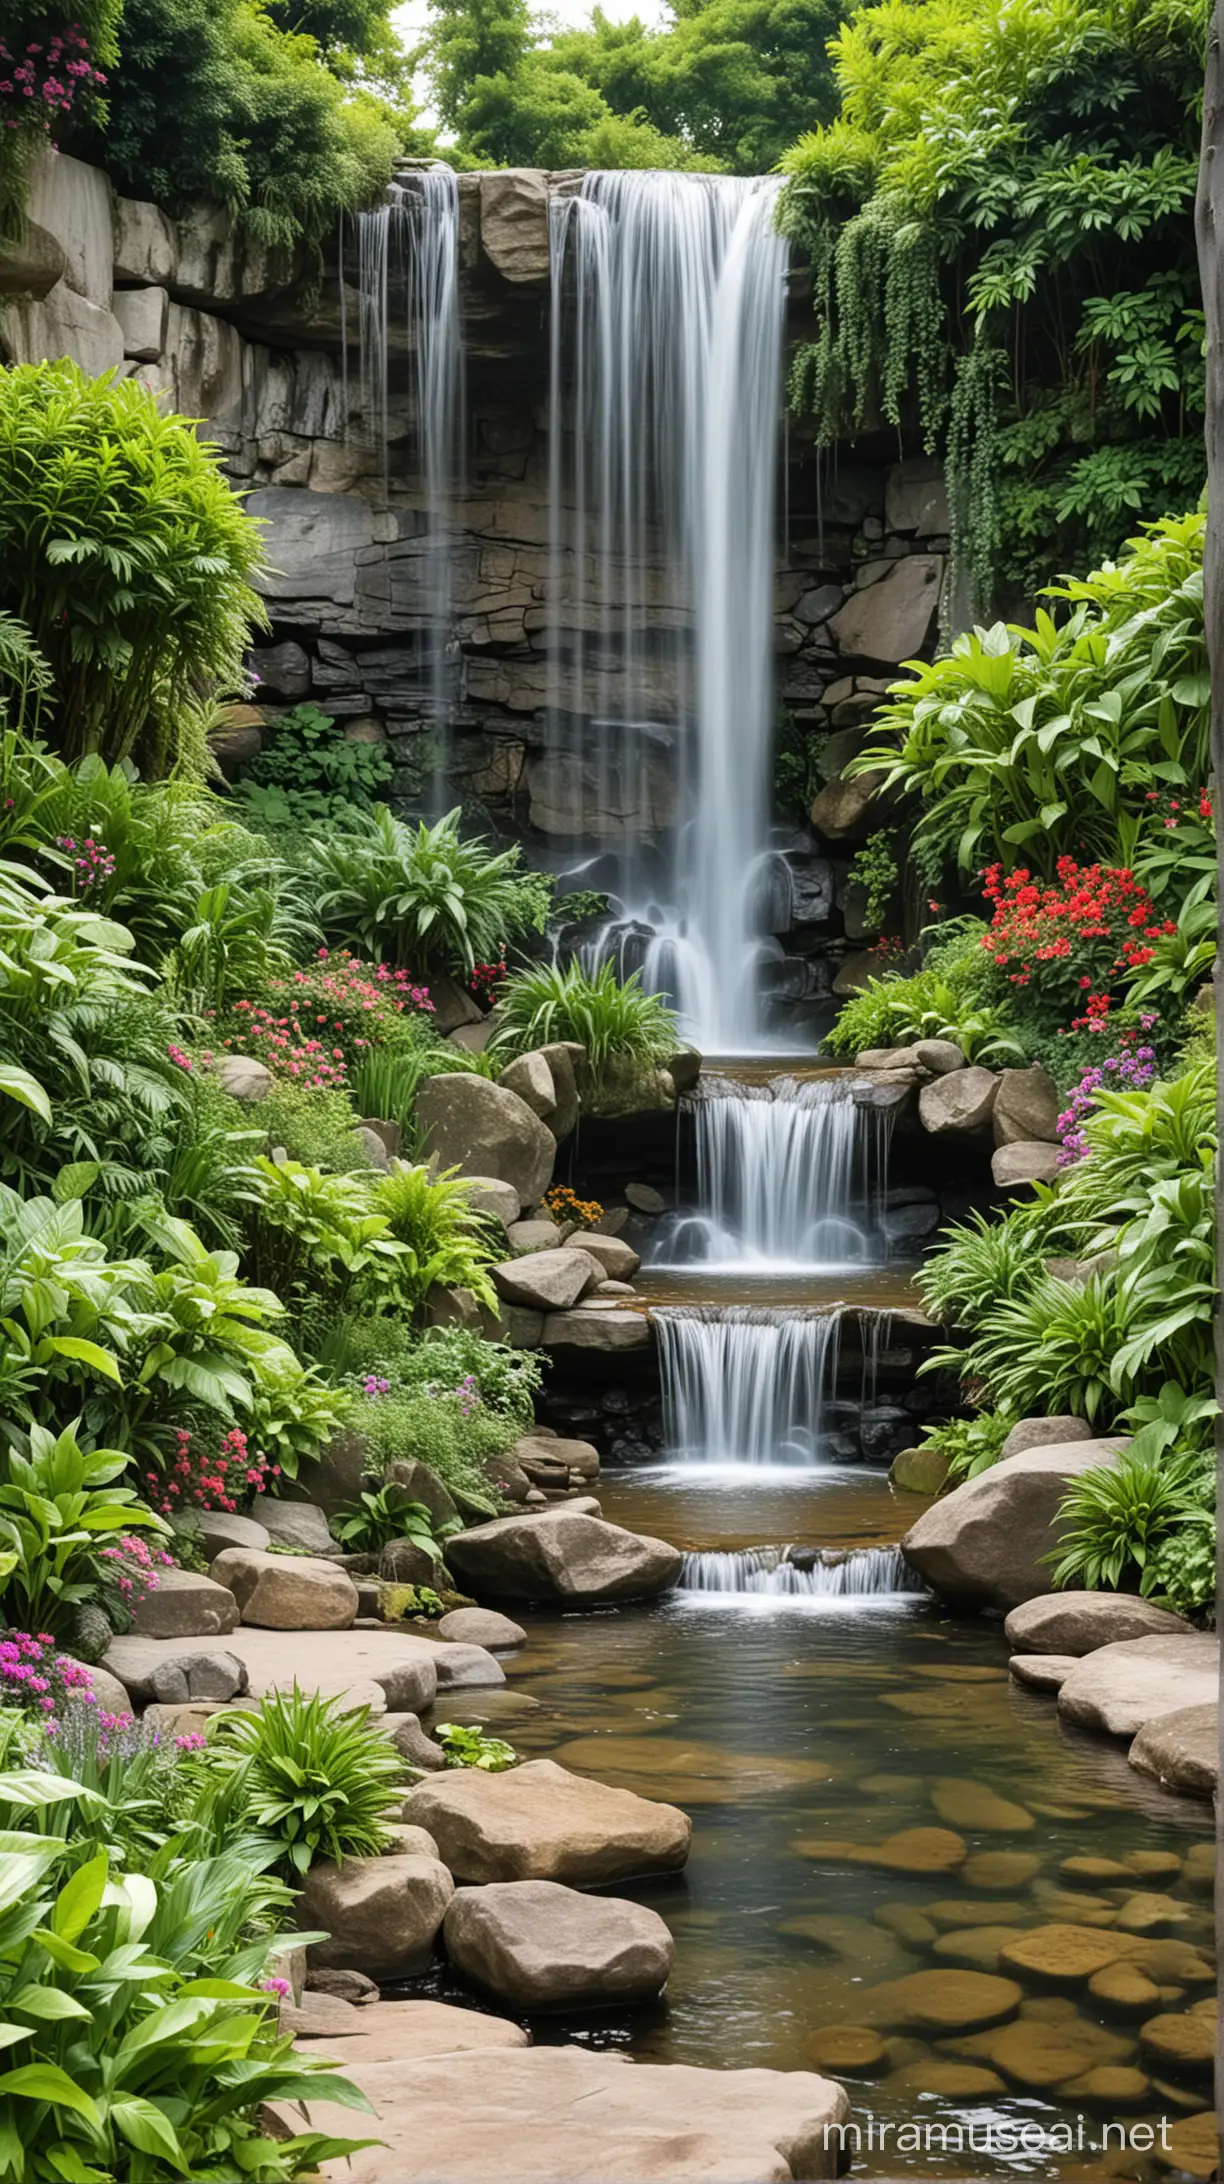 Lush Waterfall Oasis Amidst Verdant Gardens